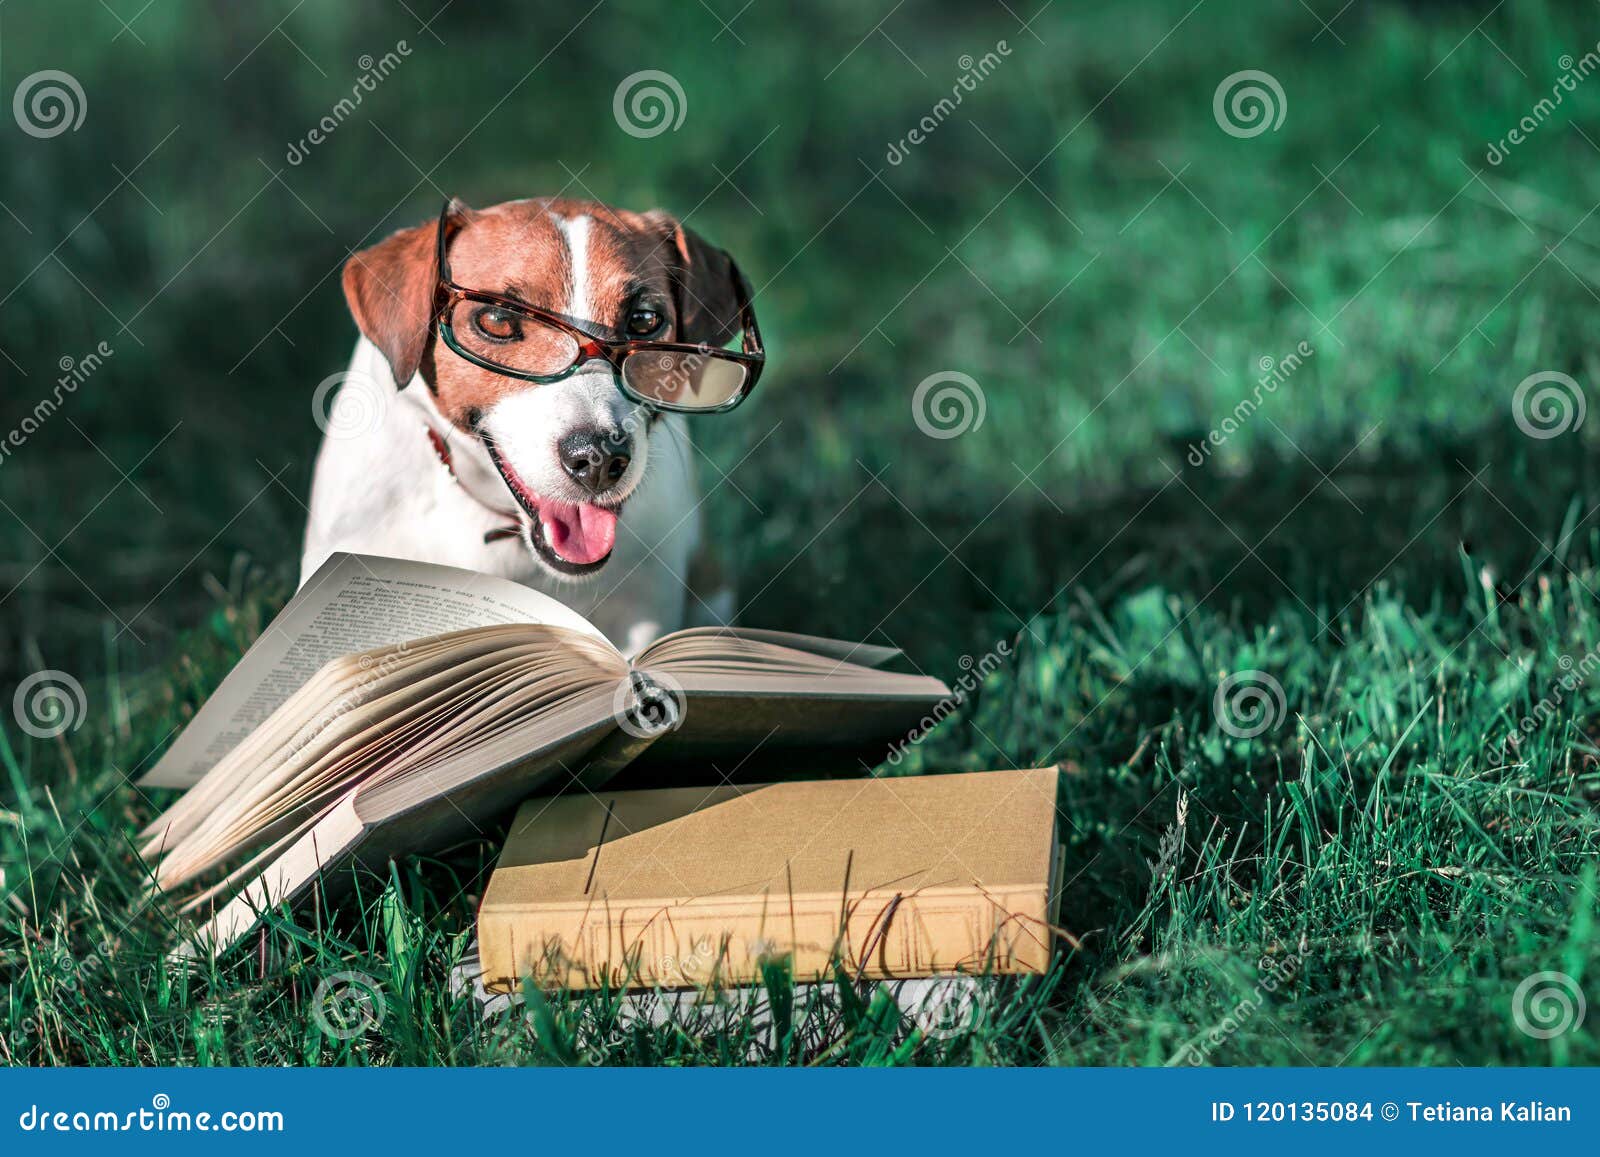 Cute Pet Jack Russel Terrier With Eyeglasses Sitting Outside On